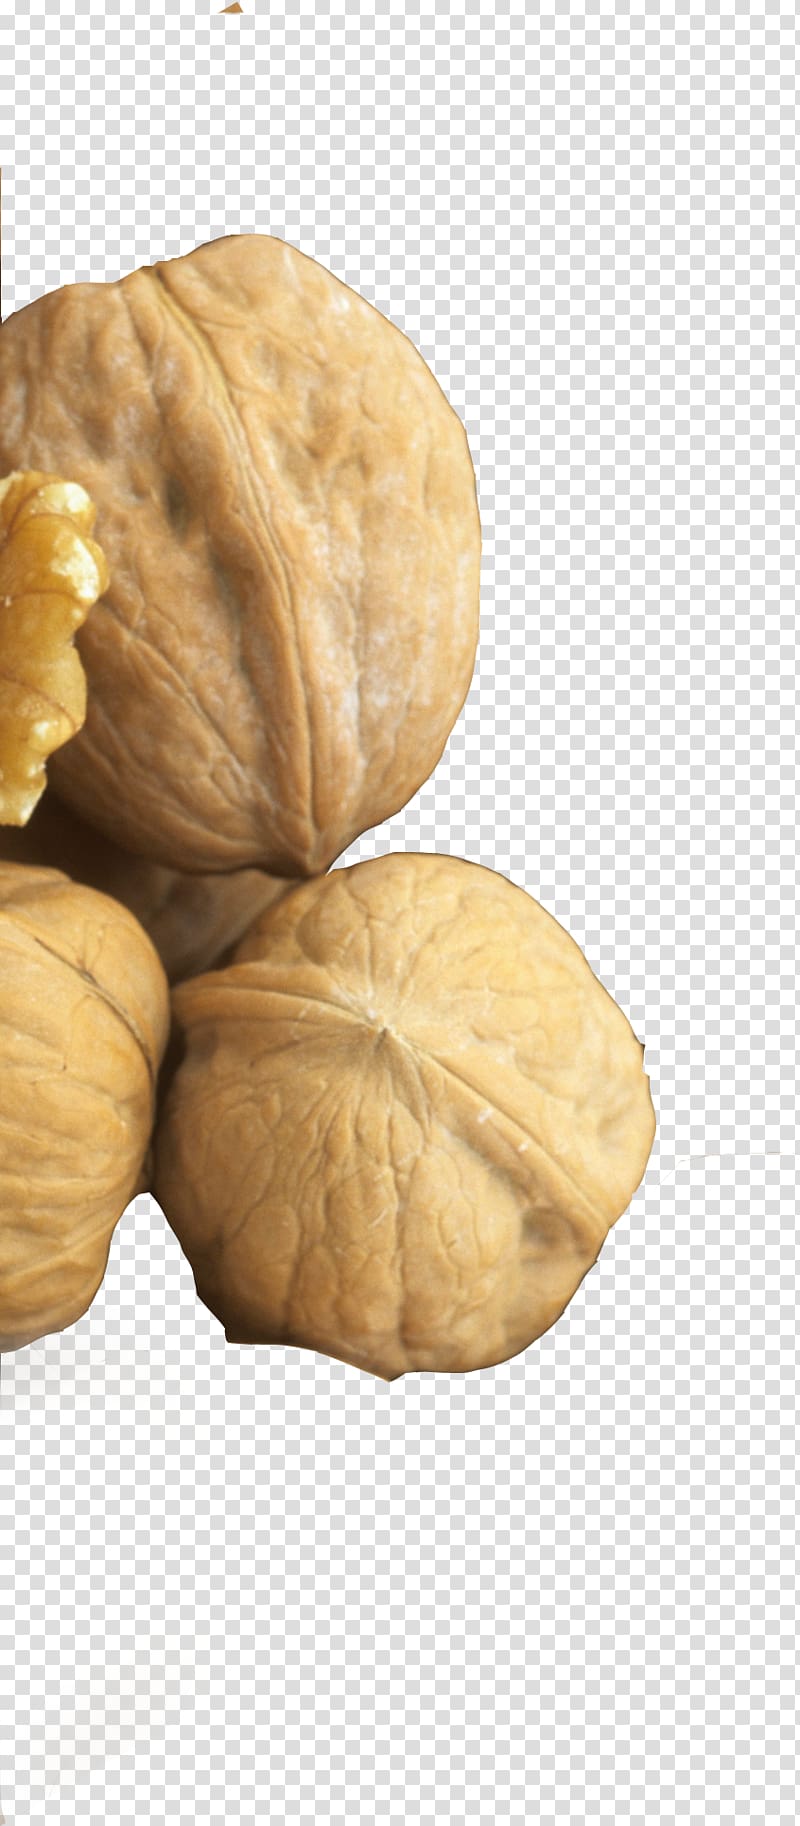 Walnut Five Grains Ingredient Food Whole grain, walnut transparent background PNG clipart